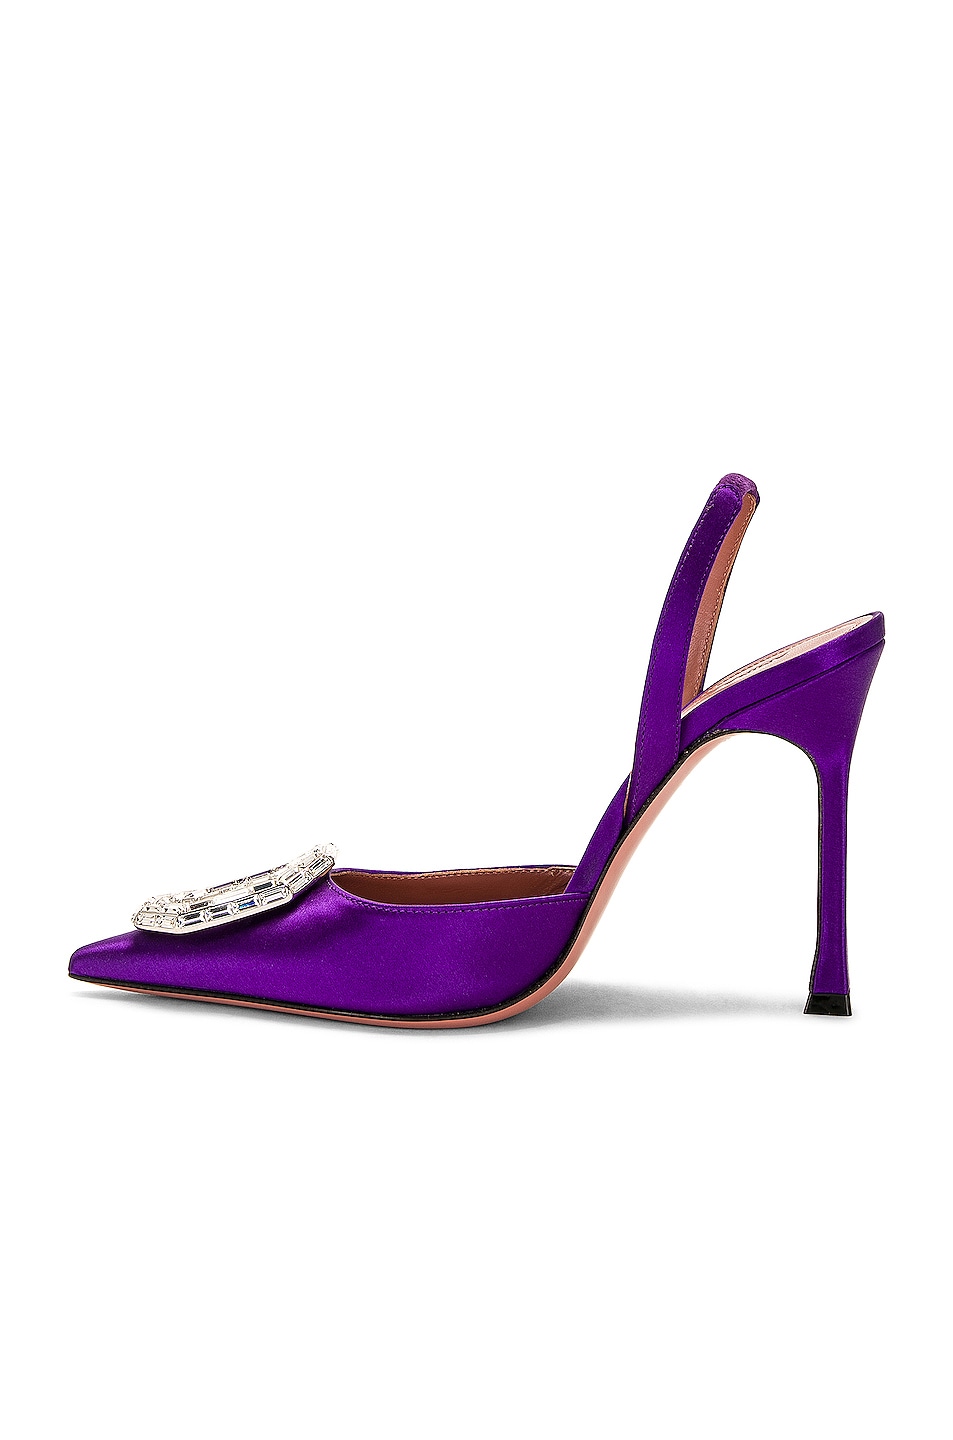 AMINA MUADDI Camelia Satin 105 Sling Heel in Purple | FWRD